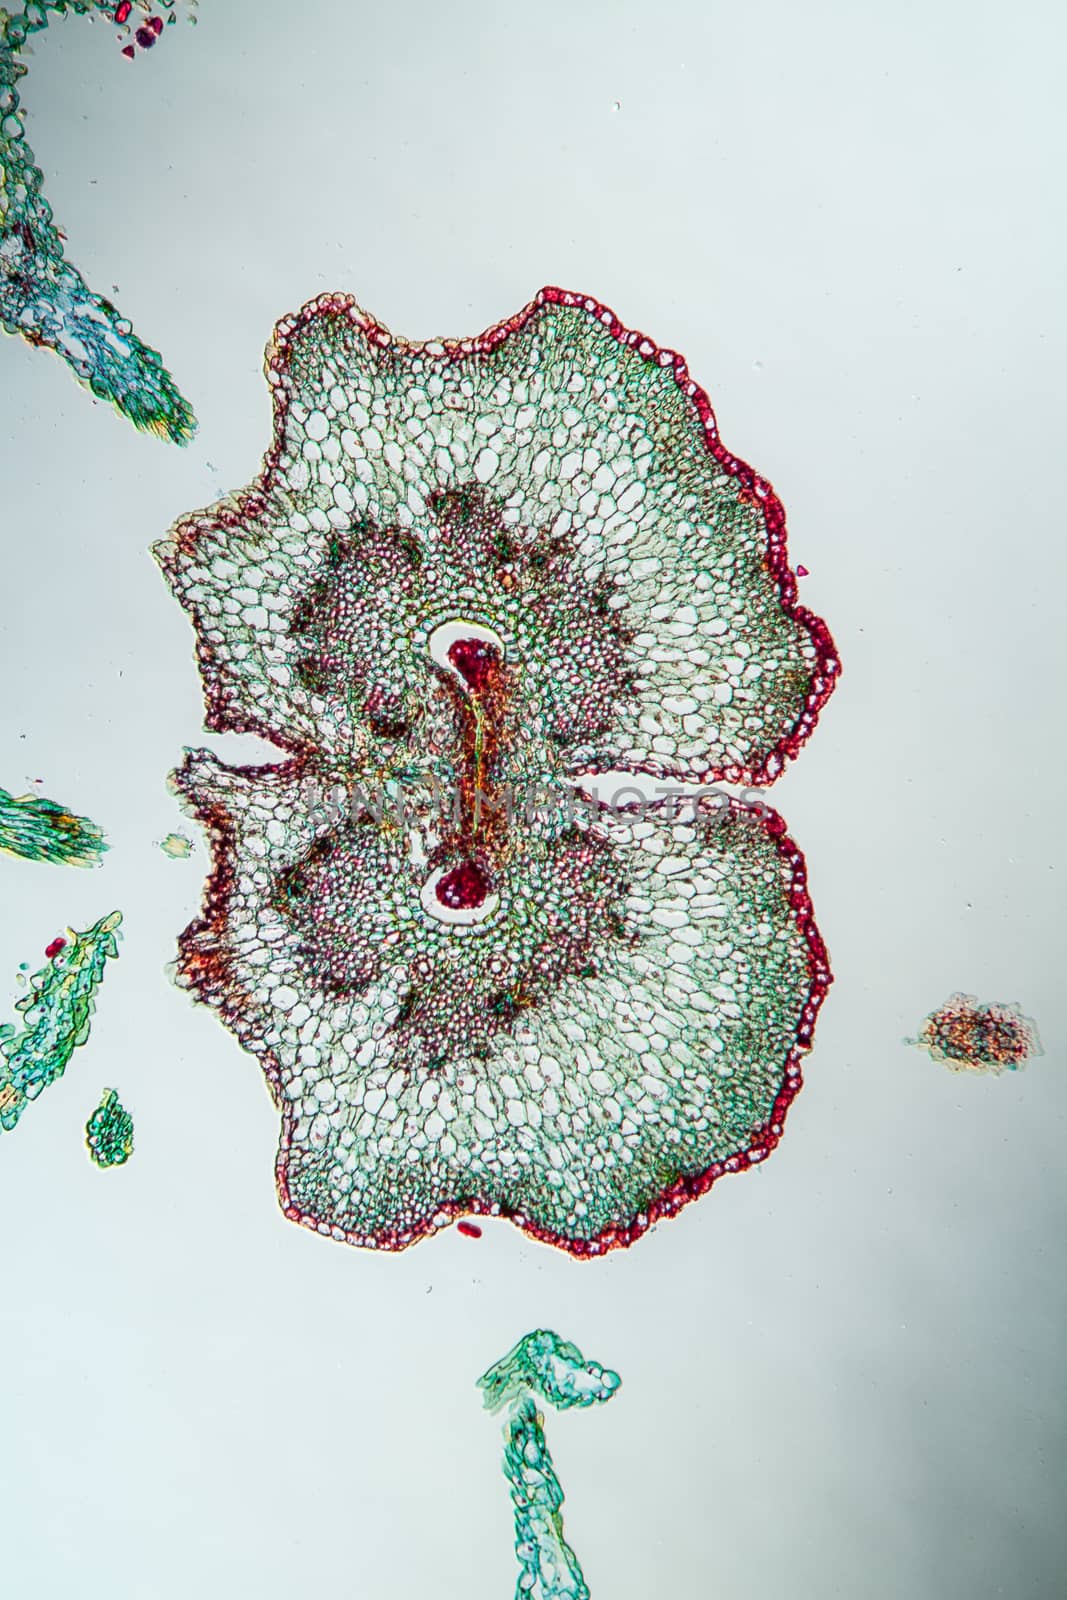 Yarrow flowers under the microscope across 100x